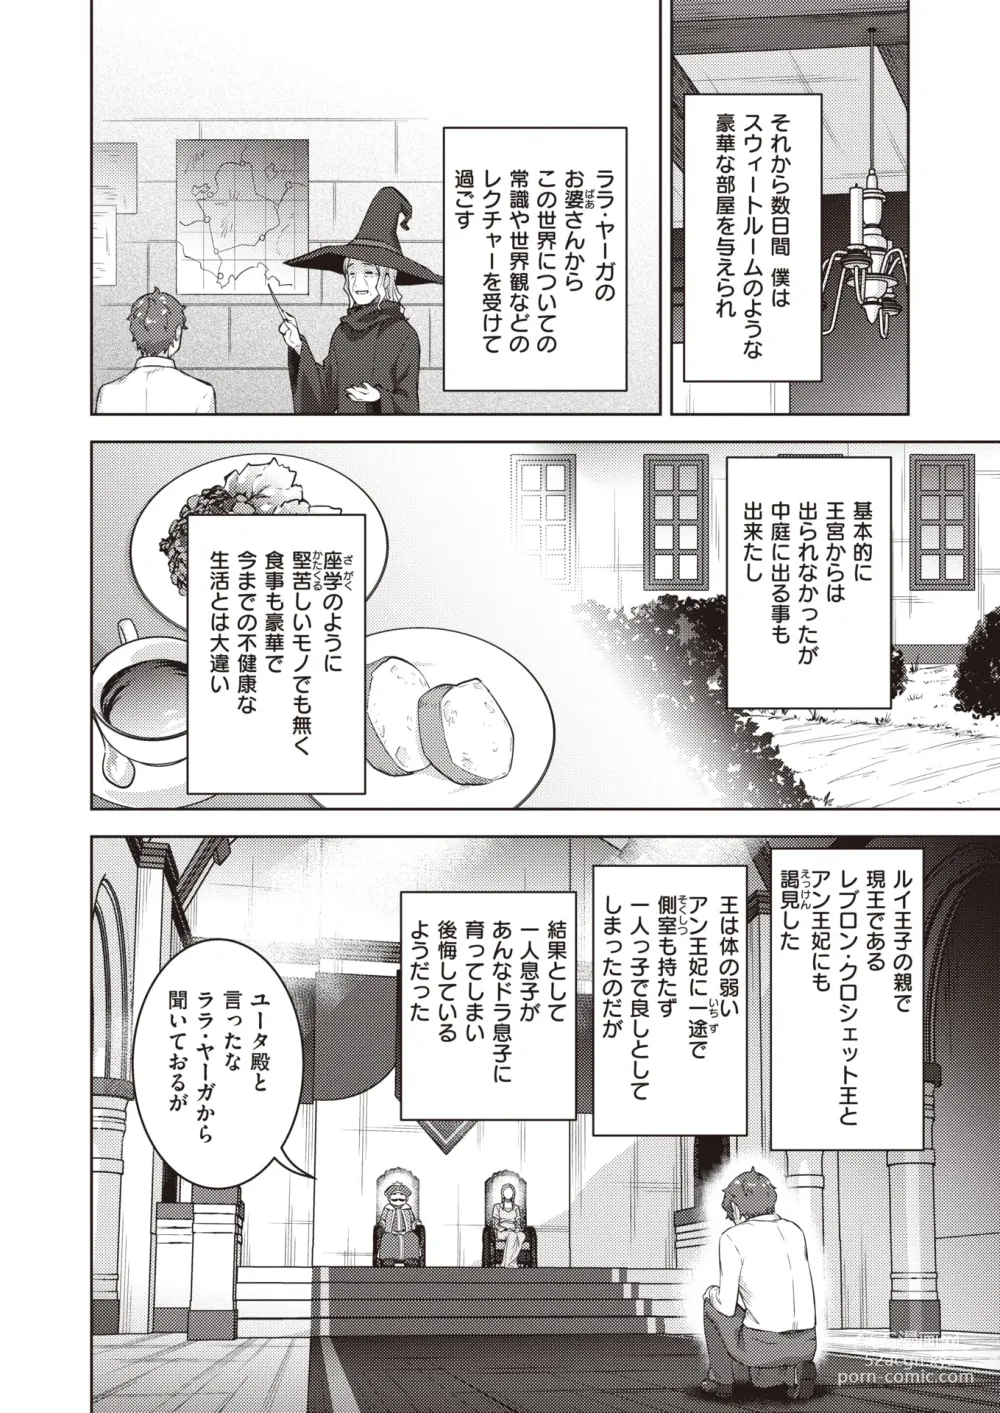 Page 55 of manga Isekai Rakuten Vol. 30